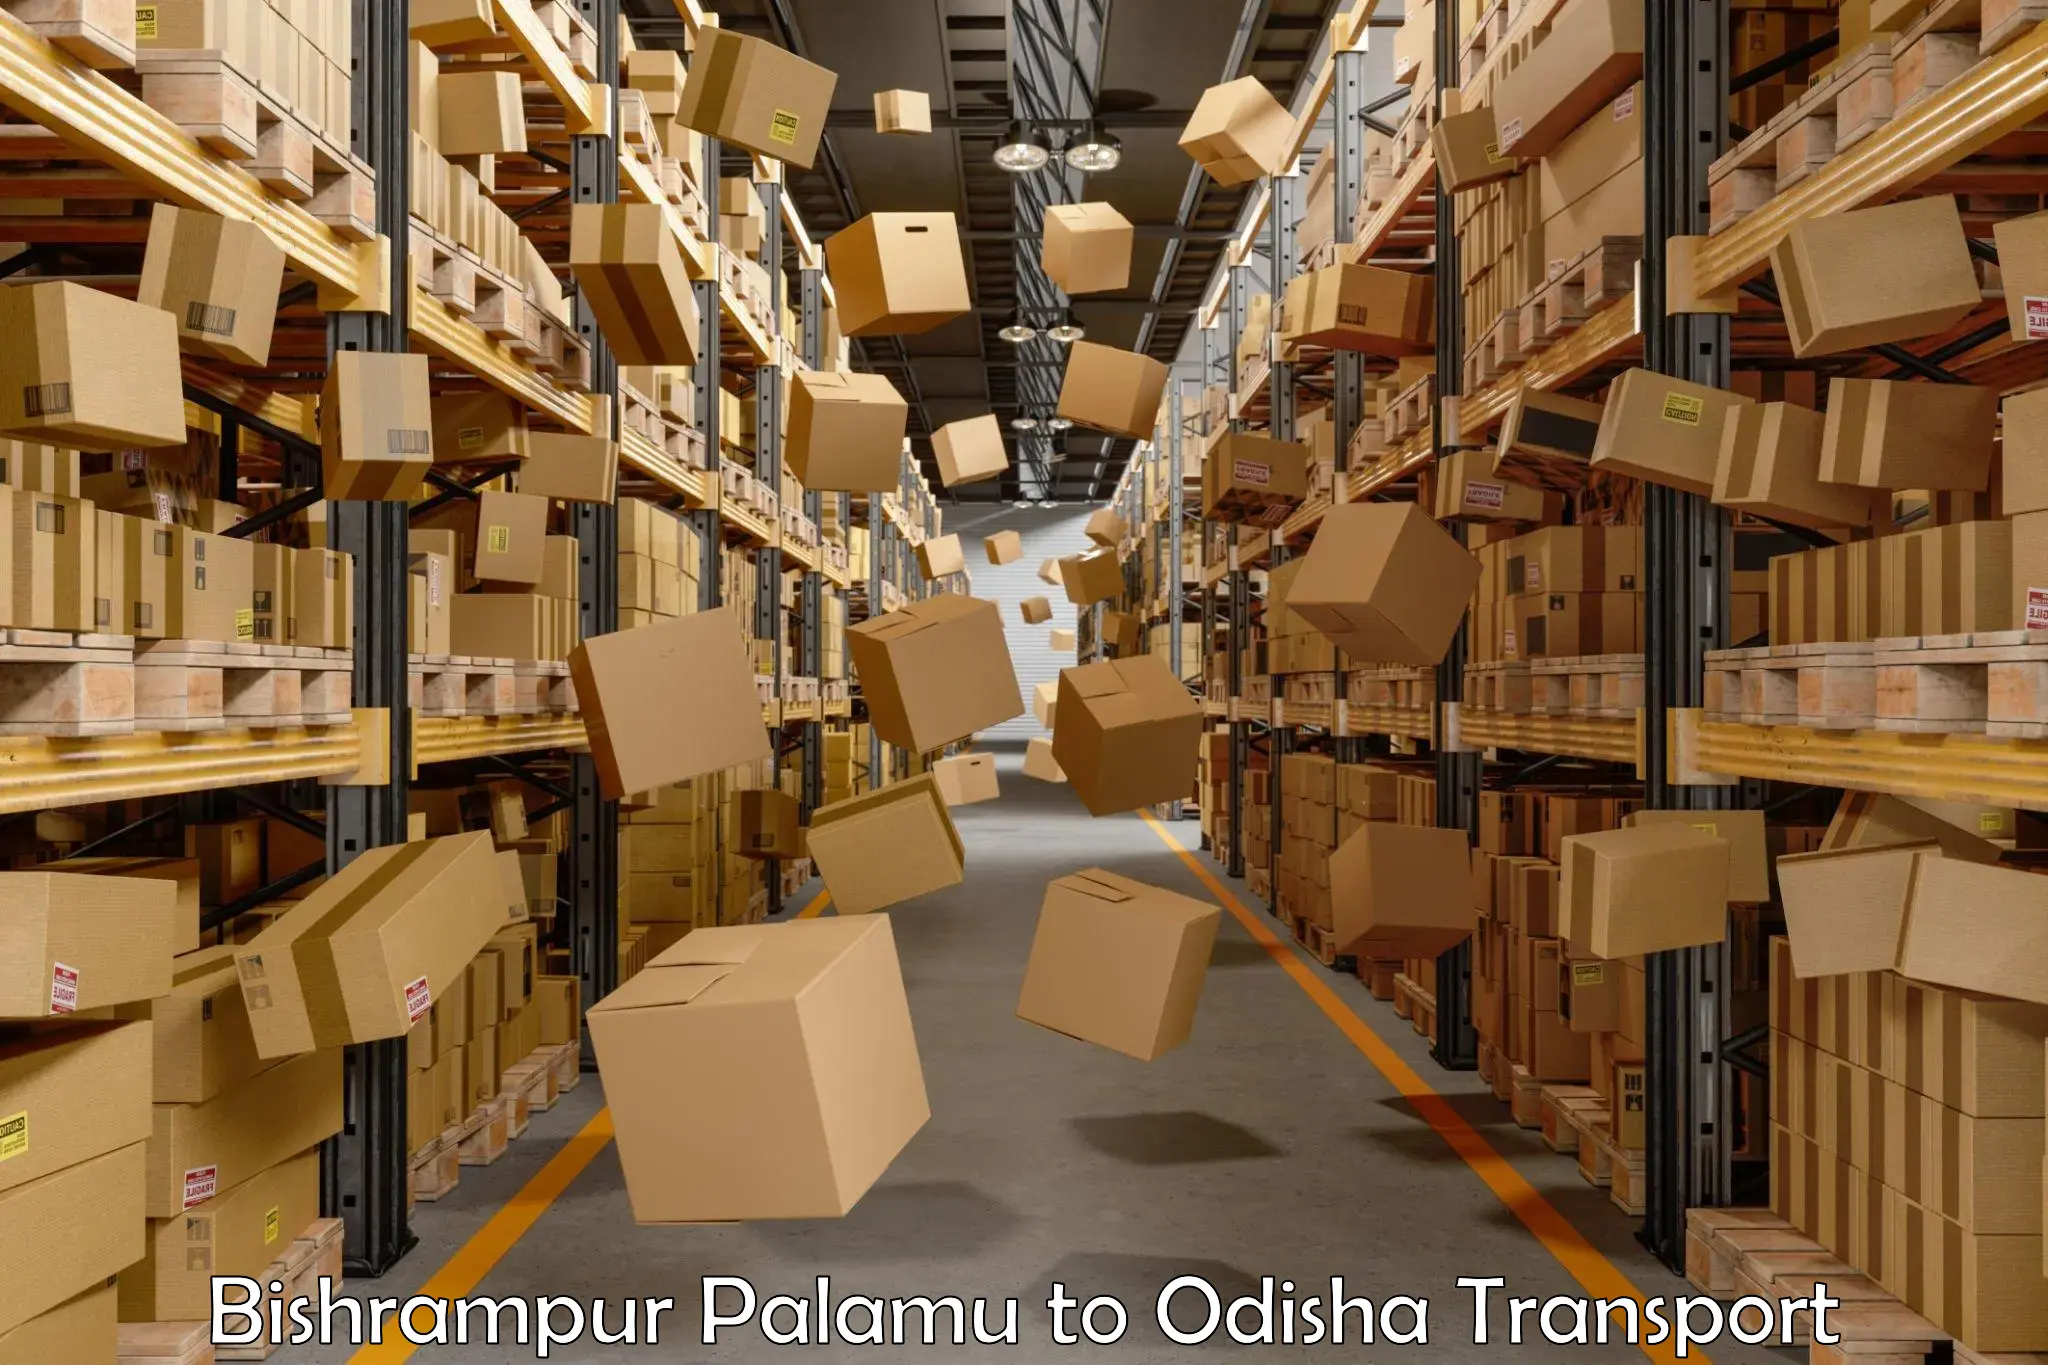 Truck transport companies in India Bishrampur Palamu to Dhamanagar